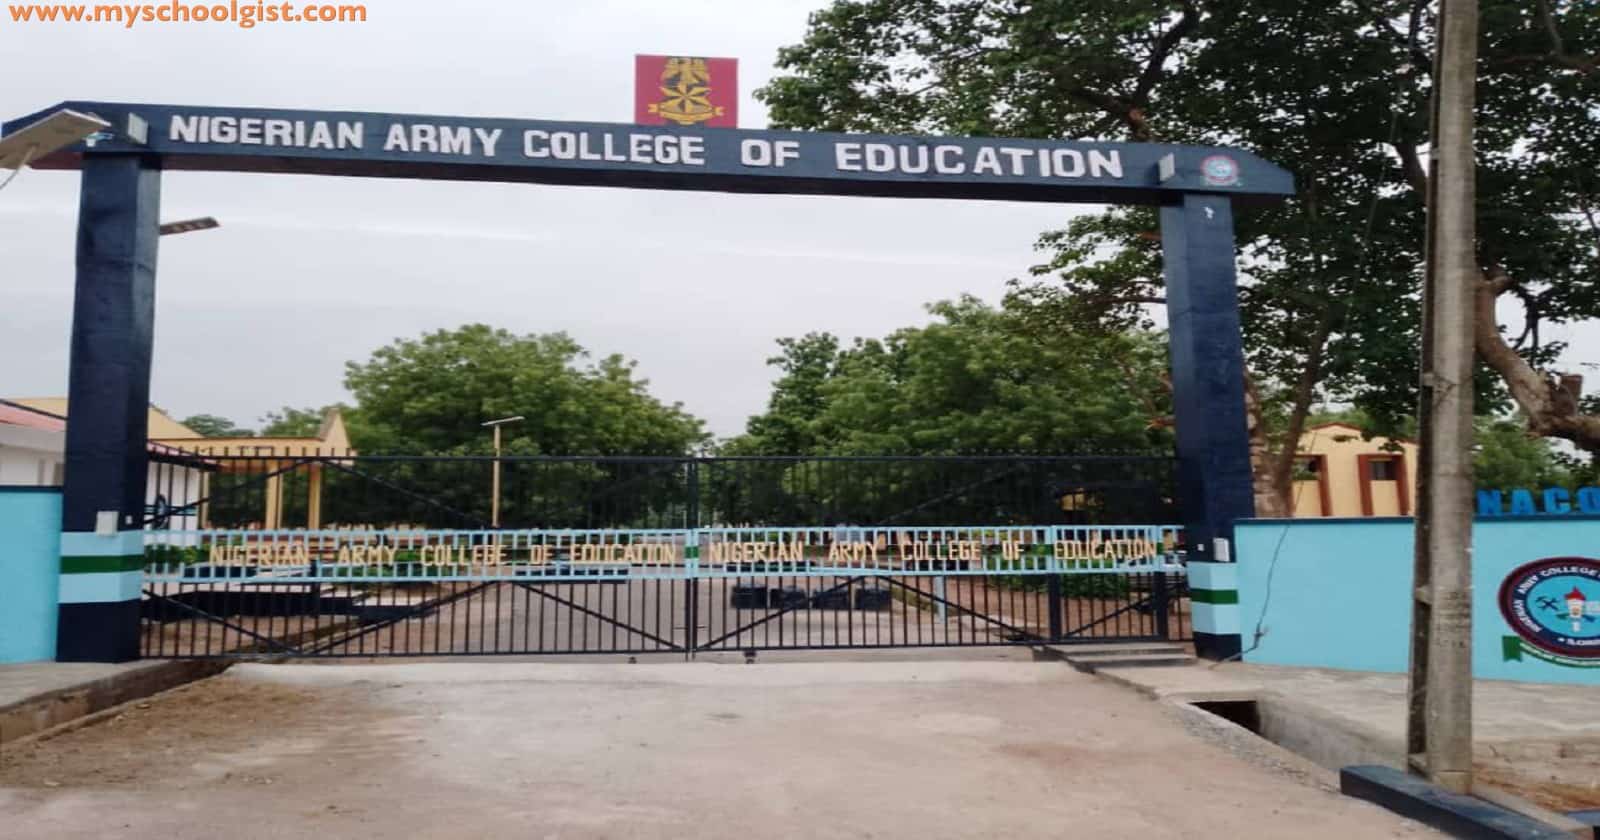 Nigerian Army College of Education (NACOE) Admission List